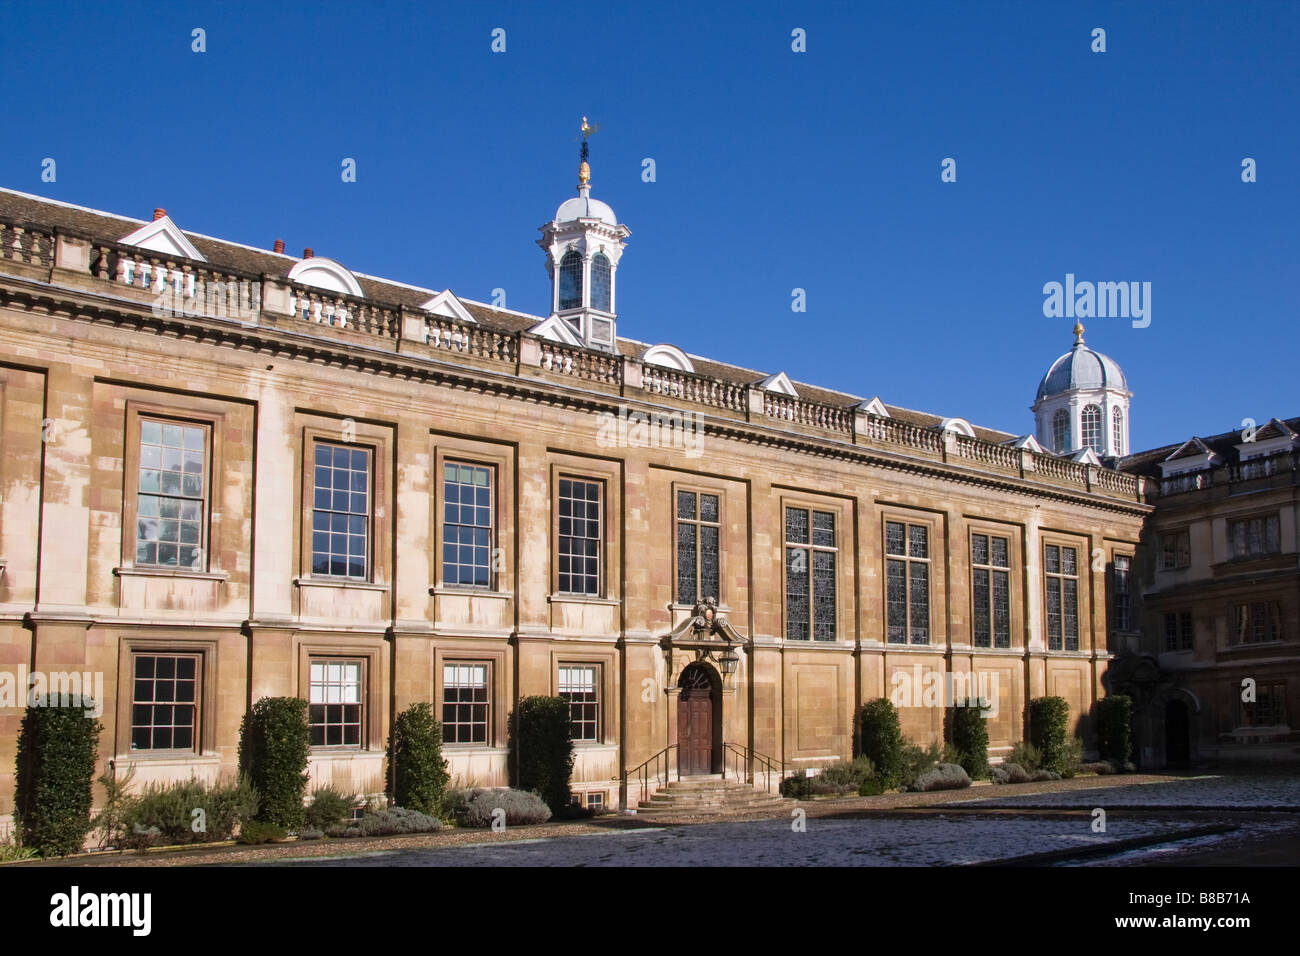 Der Innenhof des "Clare College" in Cambridge, England, UK. Stockfoto